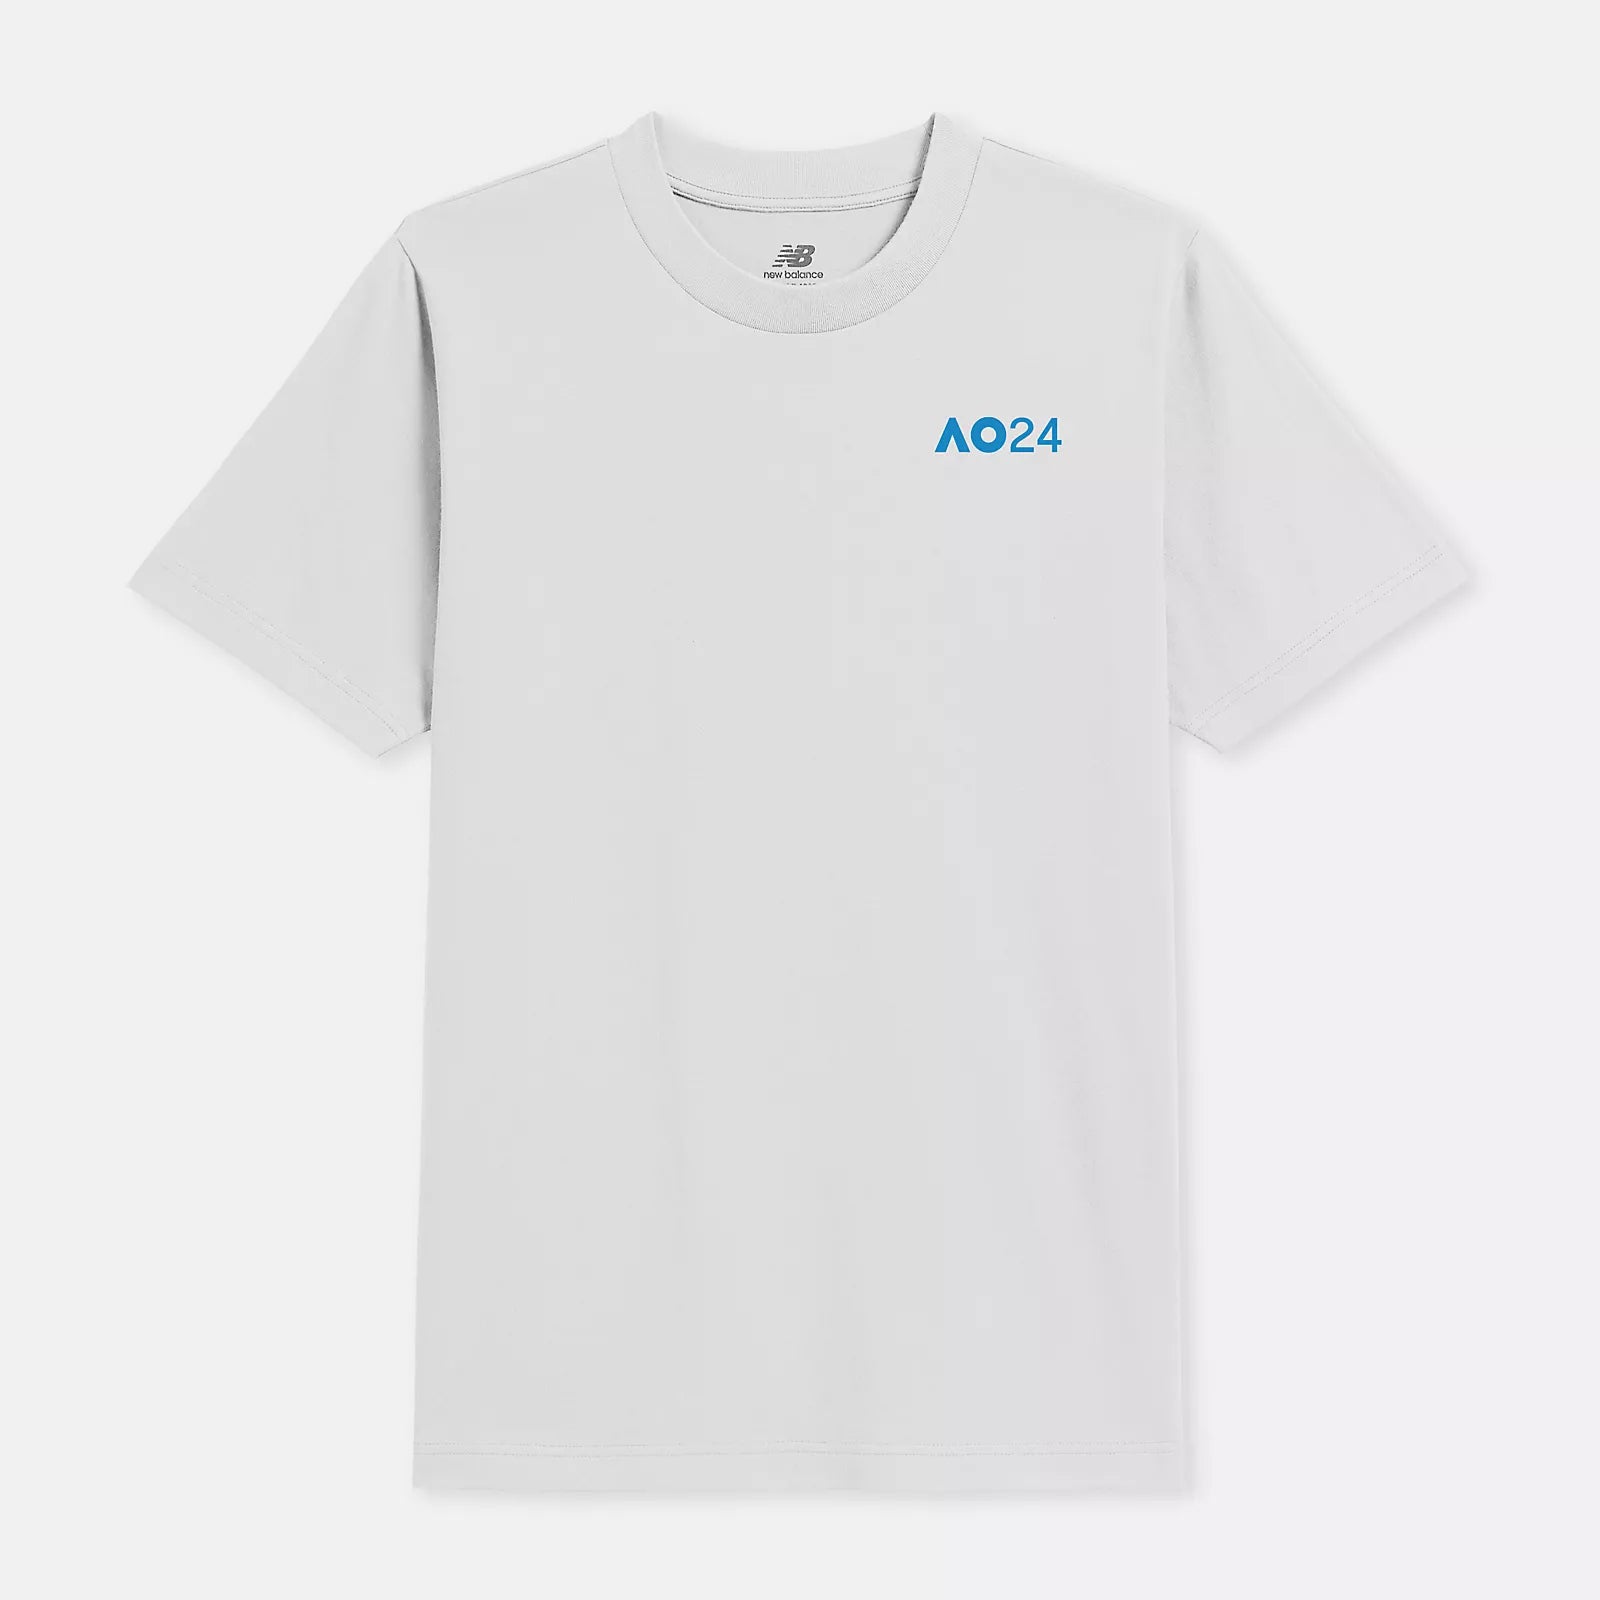 New Balance Women's White T-Shirt with AO logo